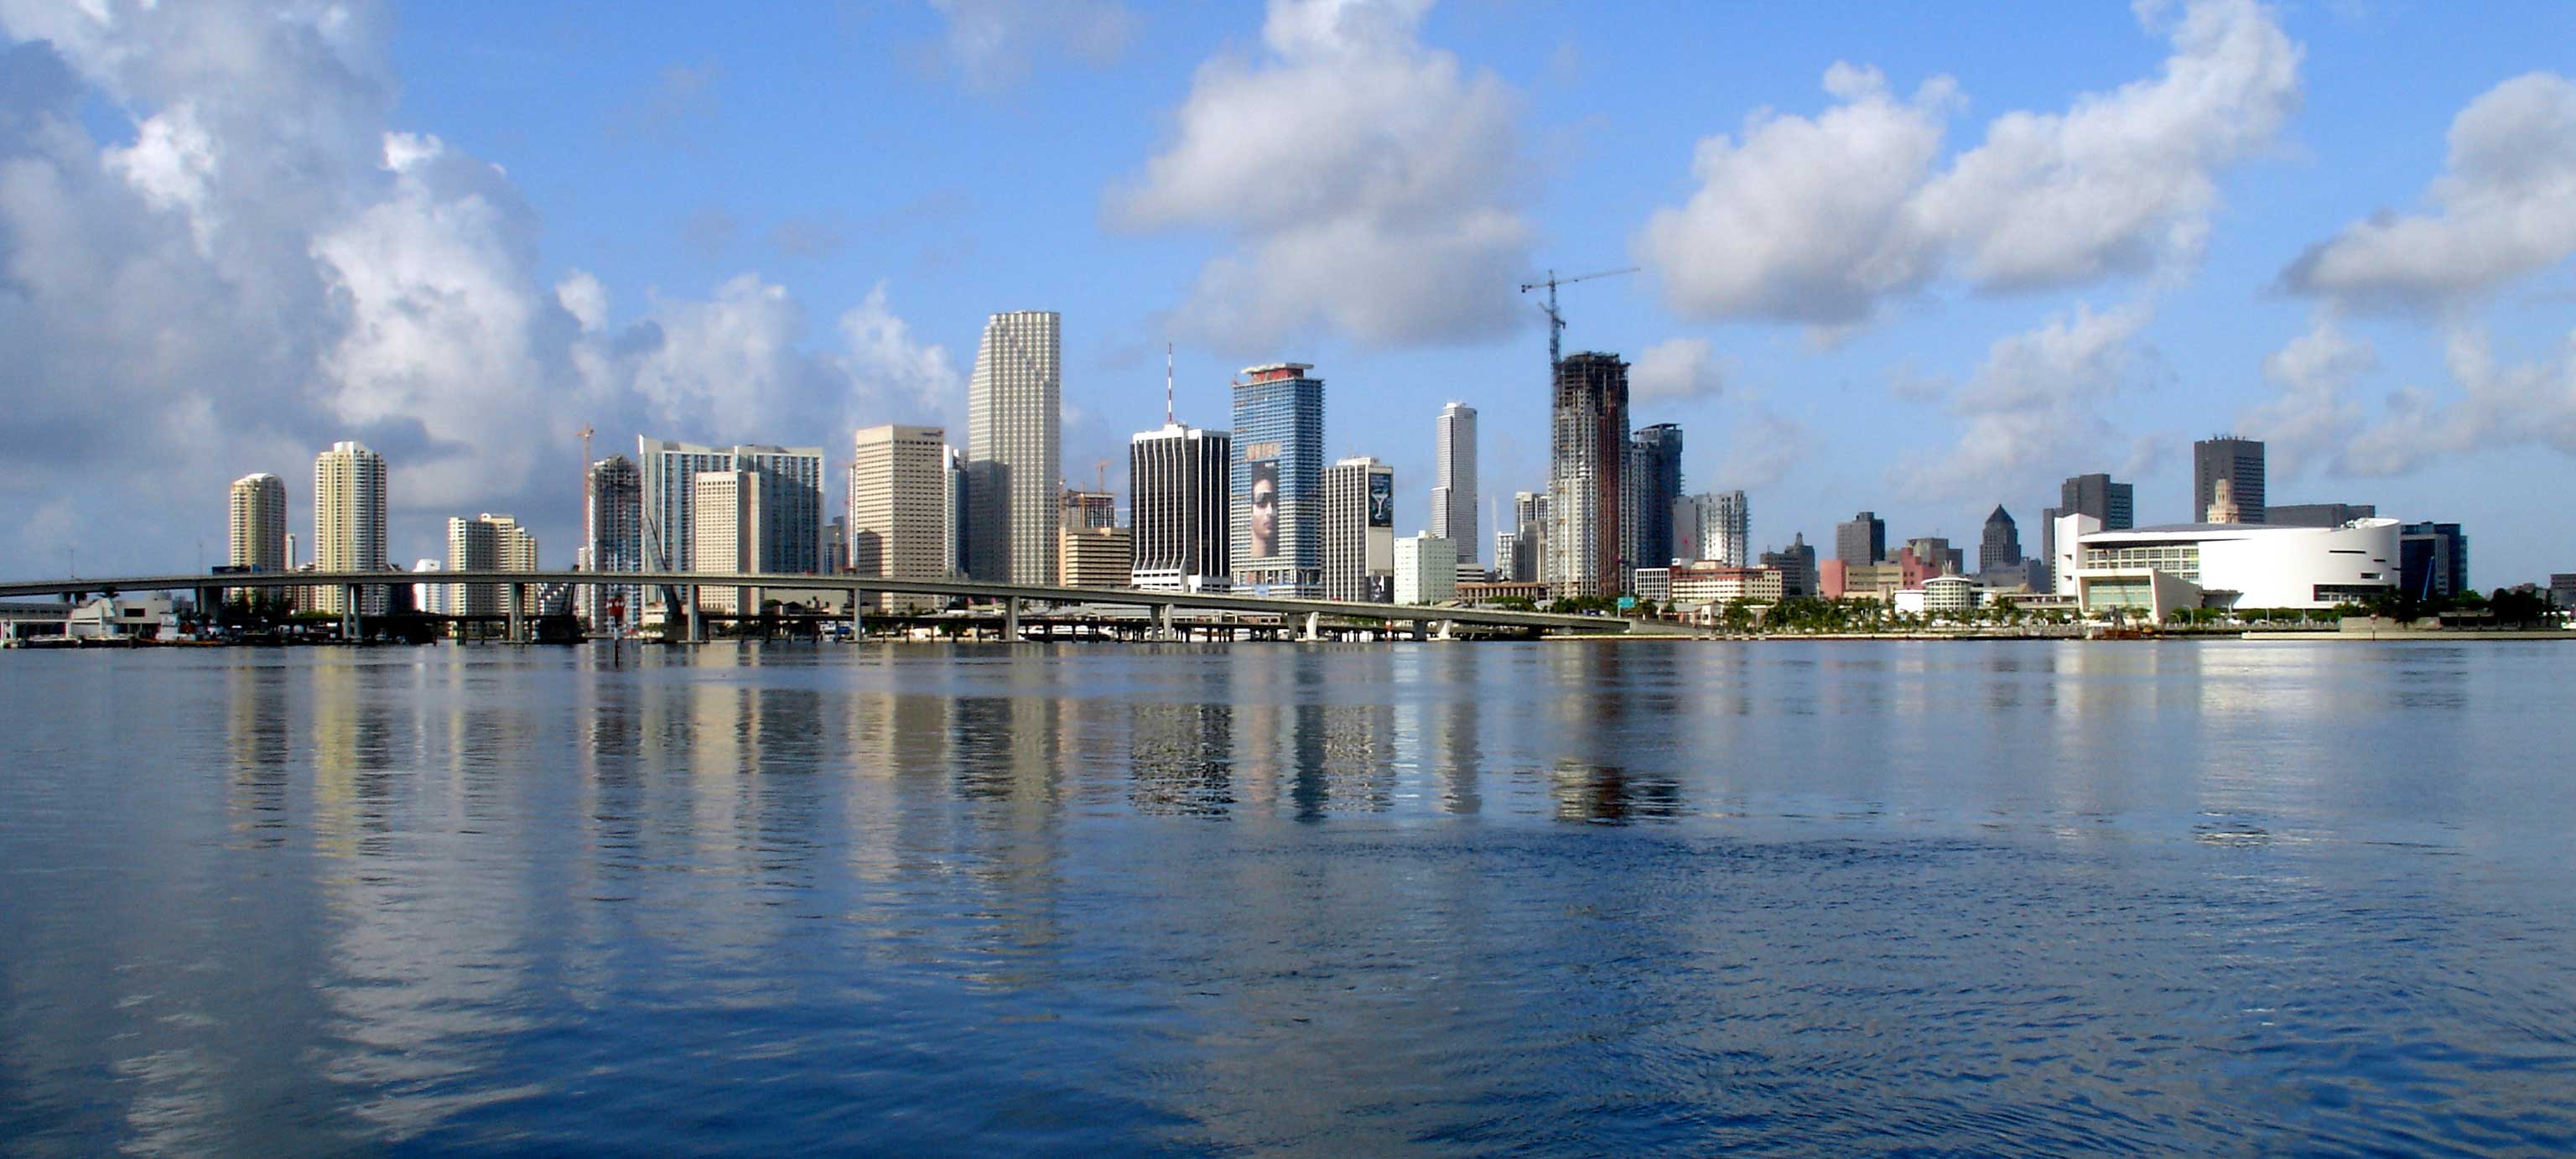 Miami-skyline-for-wikipedia-07-11-2007-by-tom-schaefer-miamitom